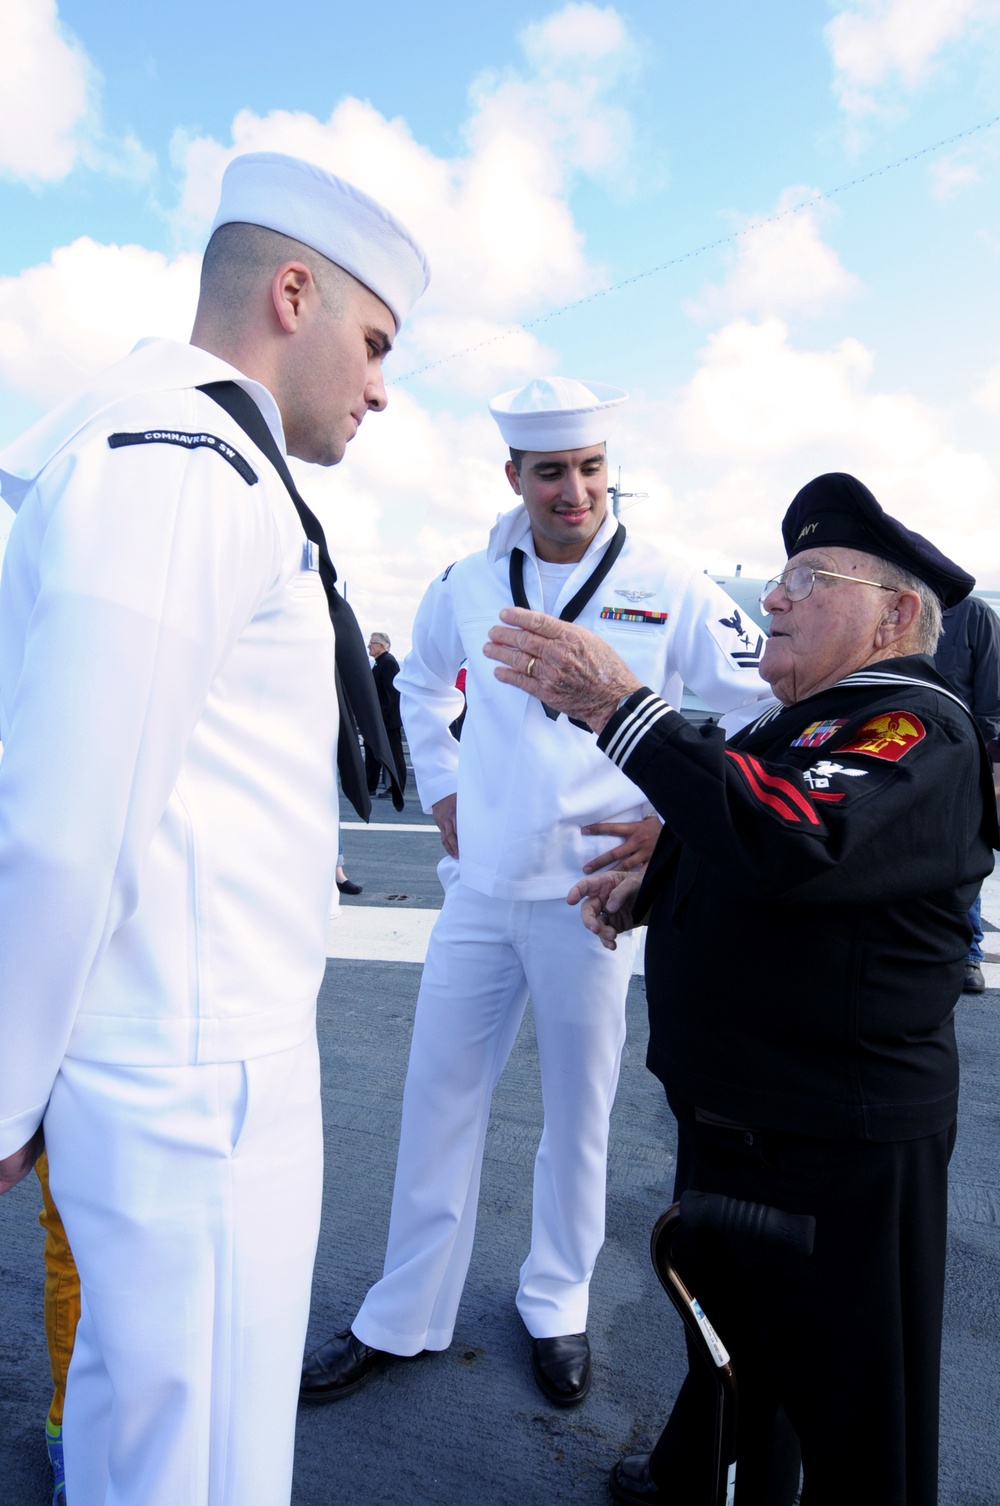 World War II veterans honored aboard USS Midway